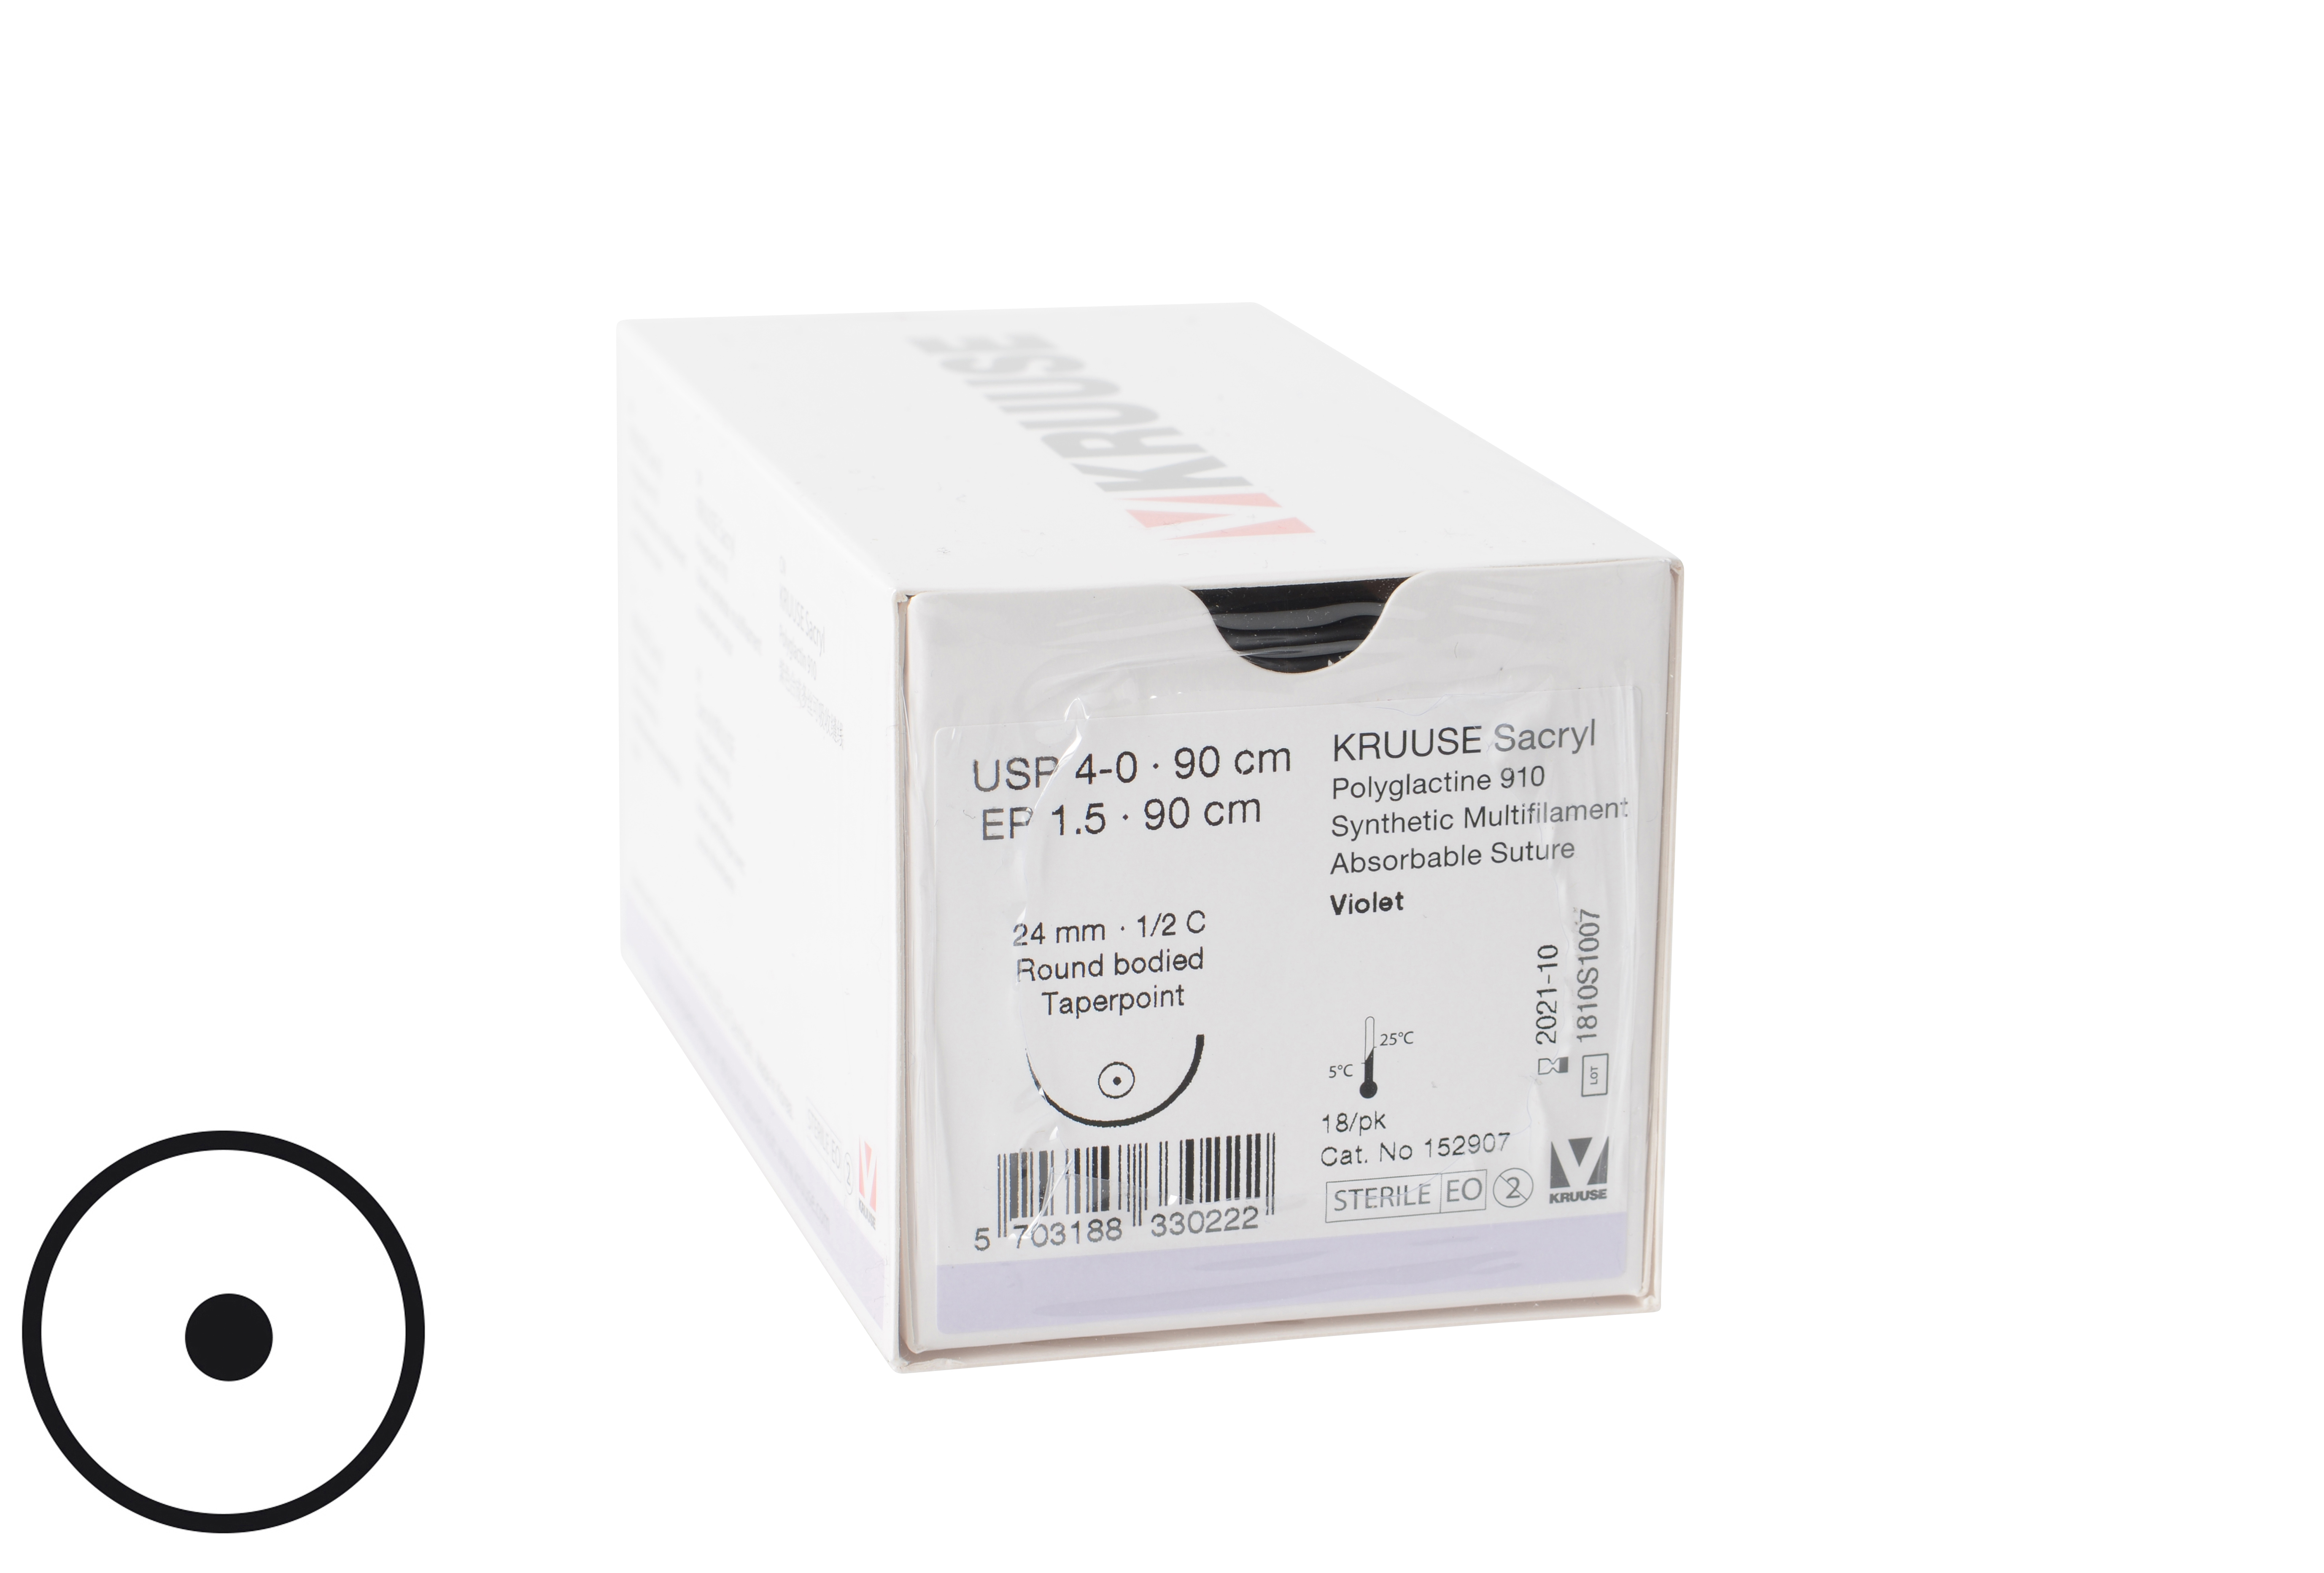 KRUUSE Sacryl Suture, USP 4-0/EP 1.5, 90 cm, needle: 24 mm, ½ C, round bodied, taperpoint, 18/pk